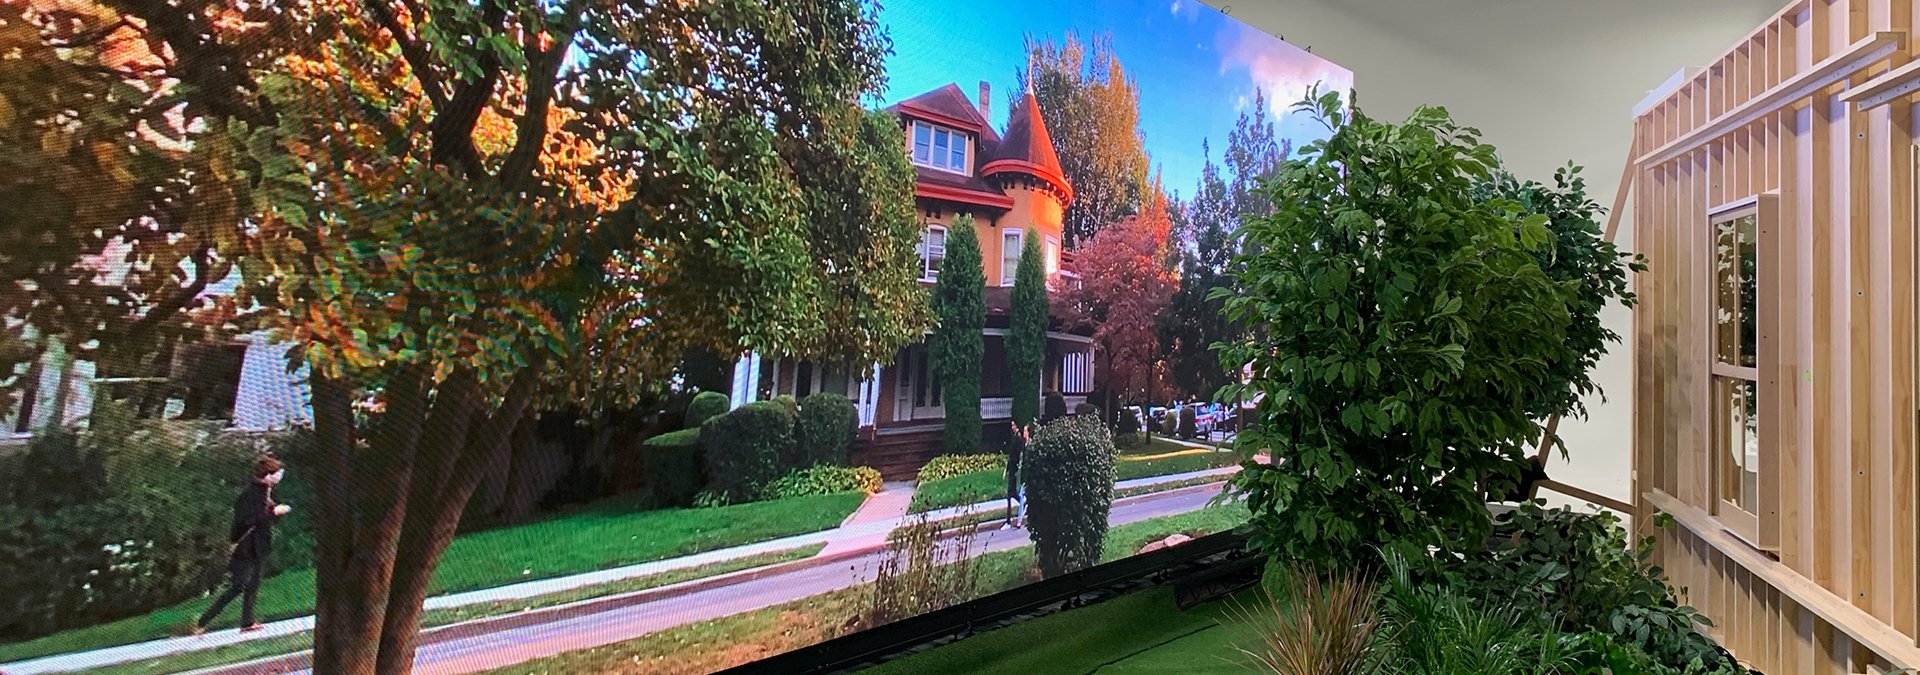 Verizon Commercial Shoot - Green Screen replacement, VFX